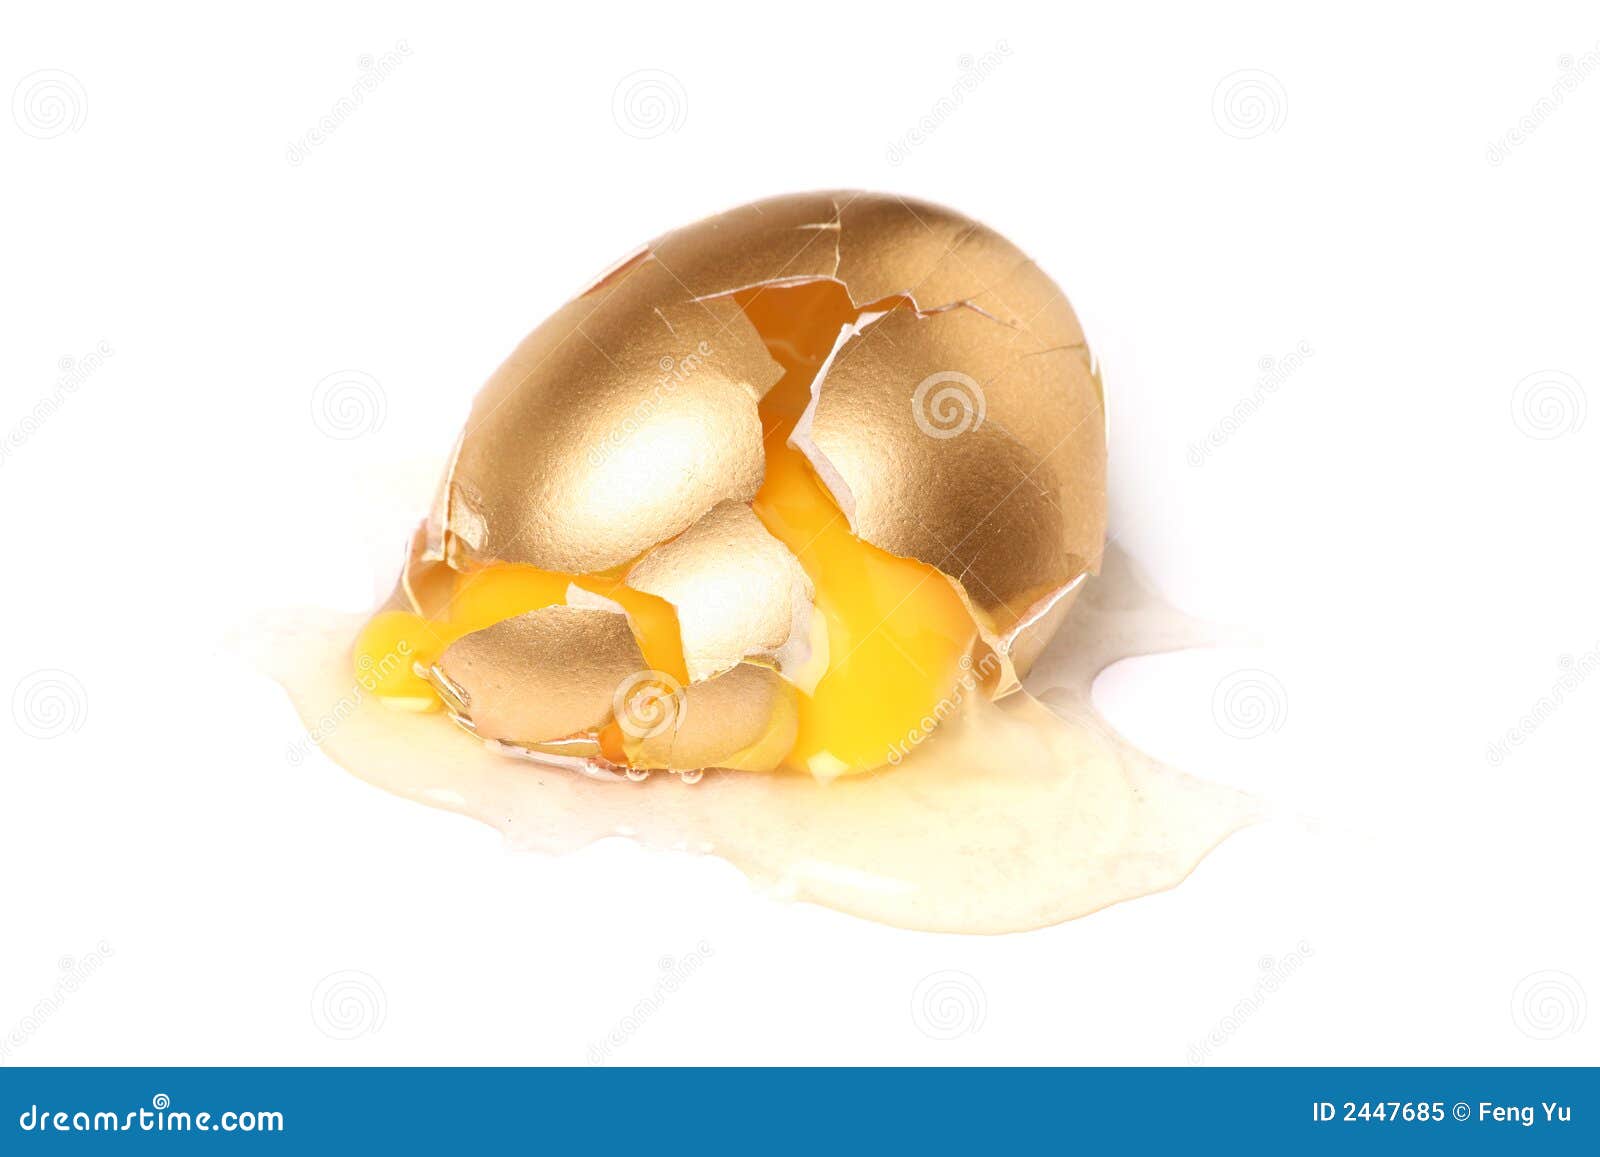 Broken Golden Egg Royalty-Free Stock Photography | CartoonDealer.com ...